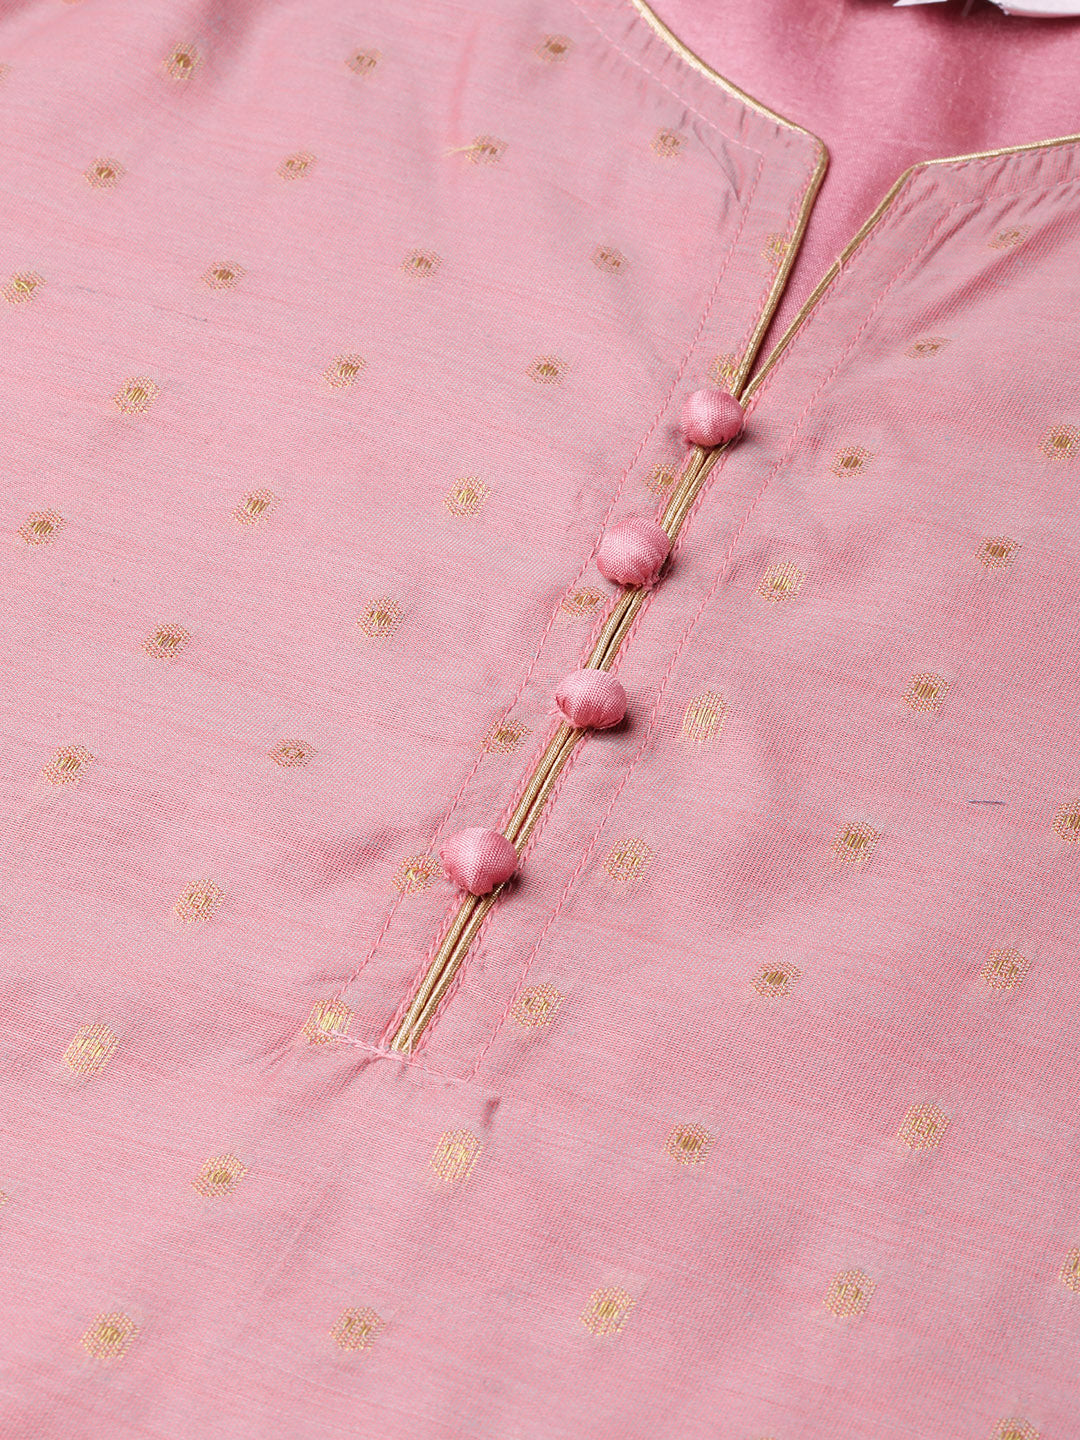 Women's Pink And Golden Self Design Kurta With Sharara - Bhama Couture